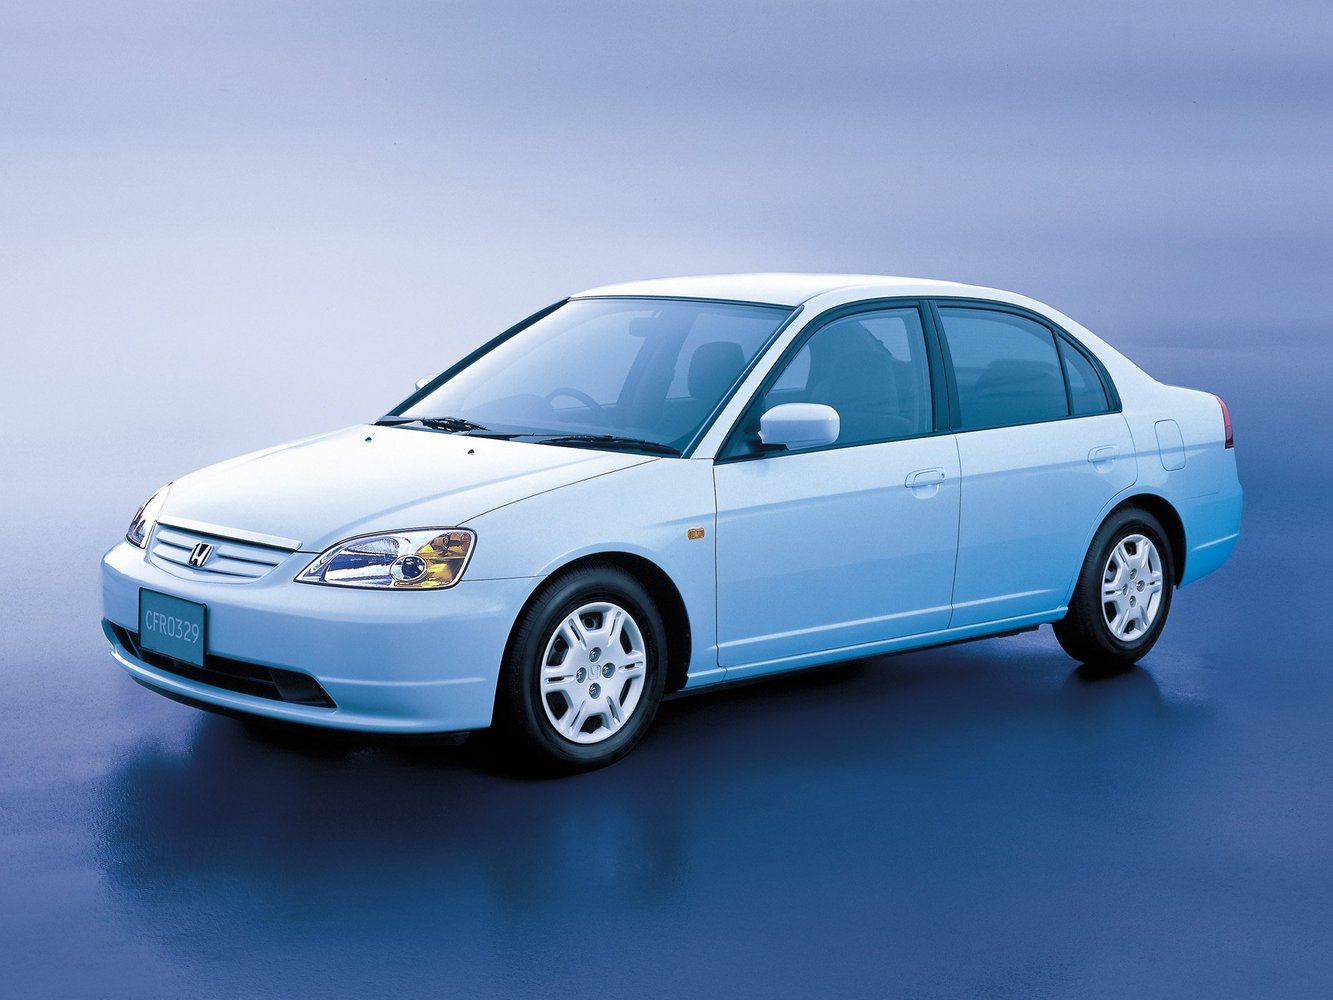 седан Honda Civic Ferio 2000 - 2005г выпуска модификация 1.5 AT (105 л.с.)